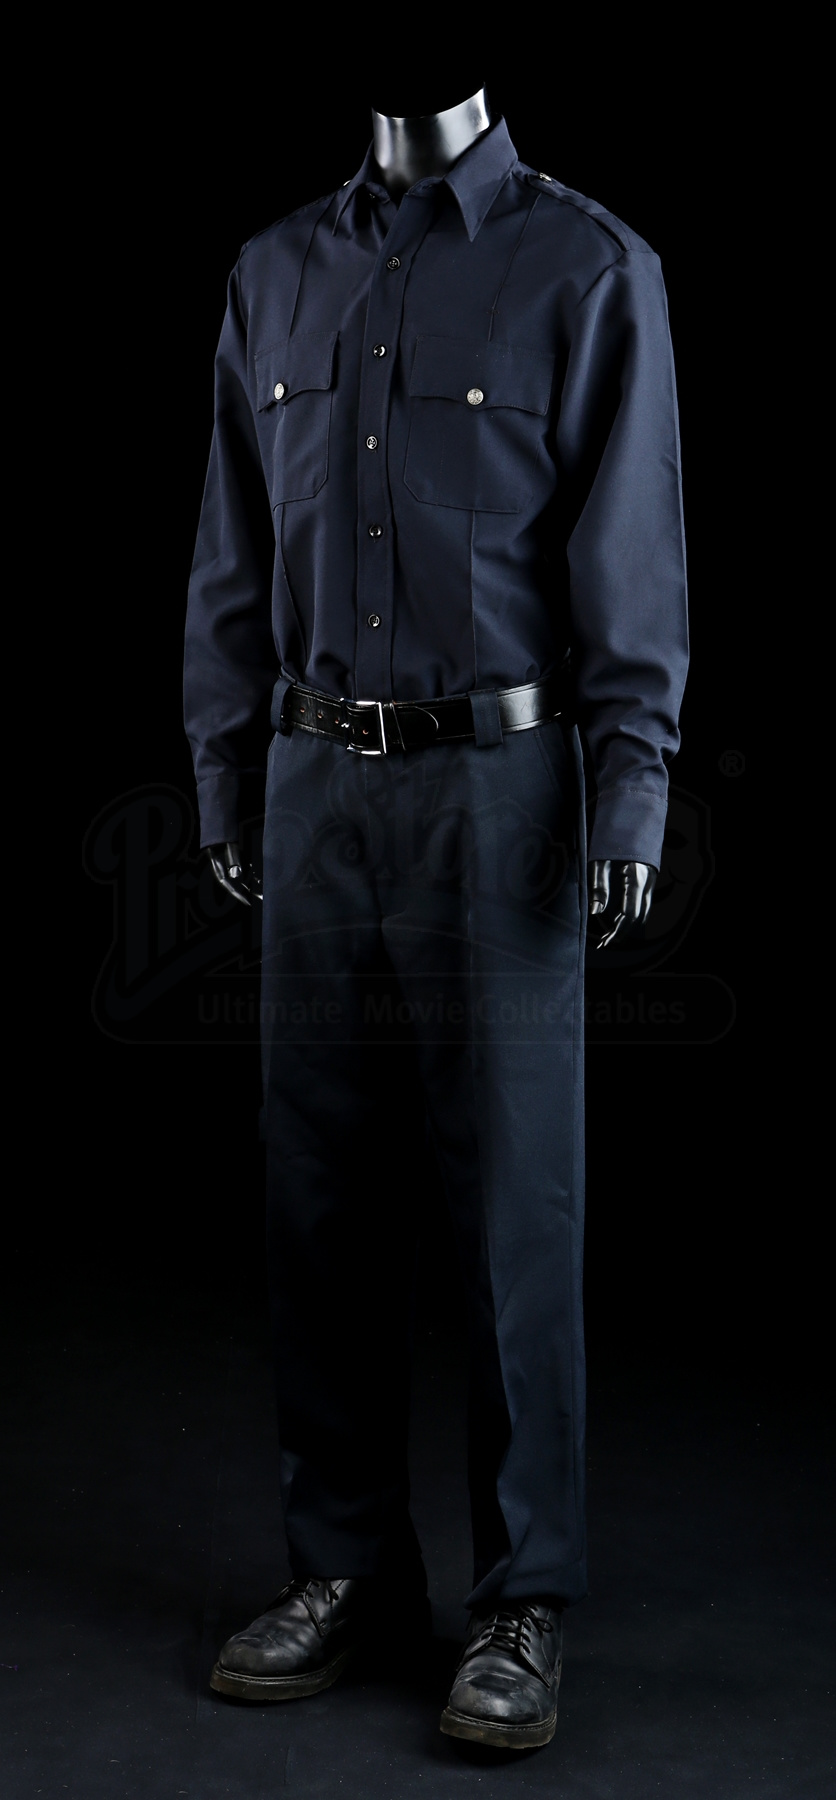 Terminator Genisys: T-1000 VFX Police Costume - Current price: $700